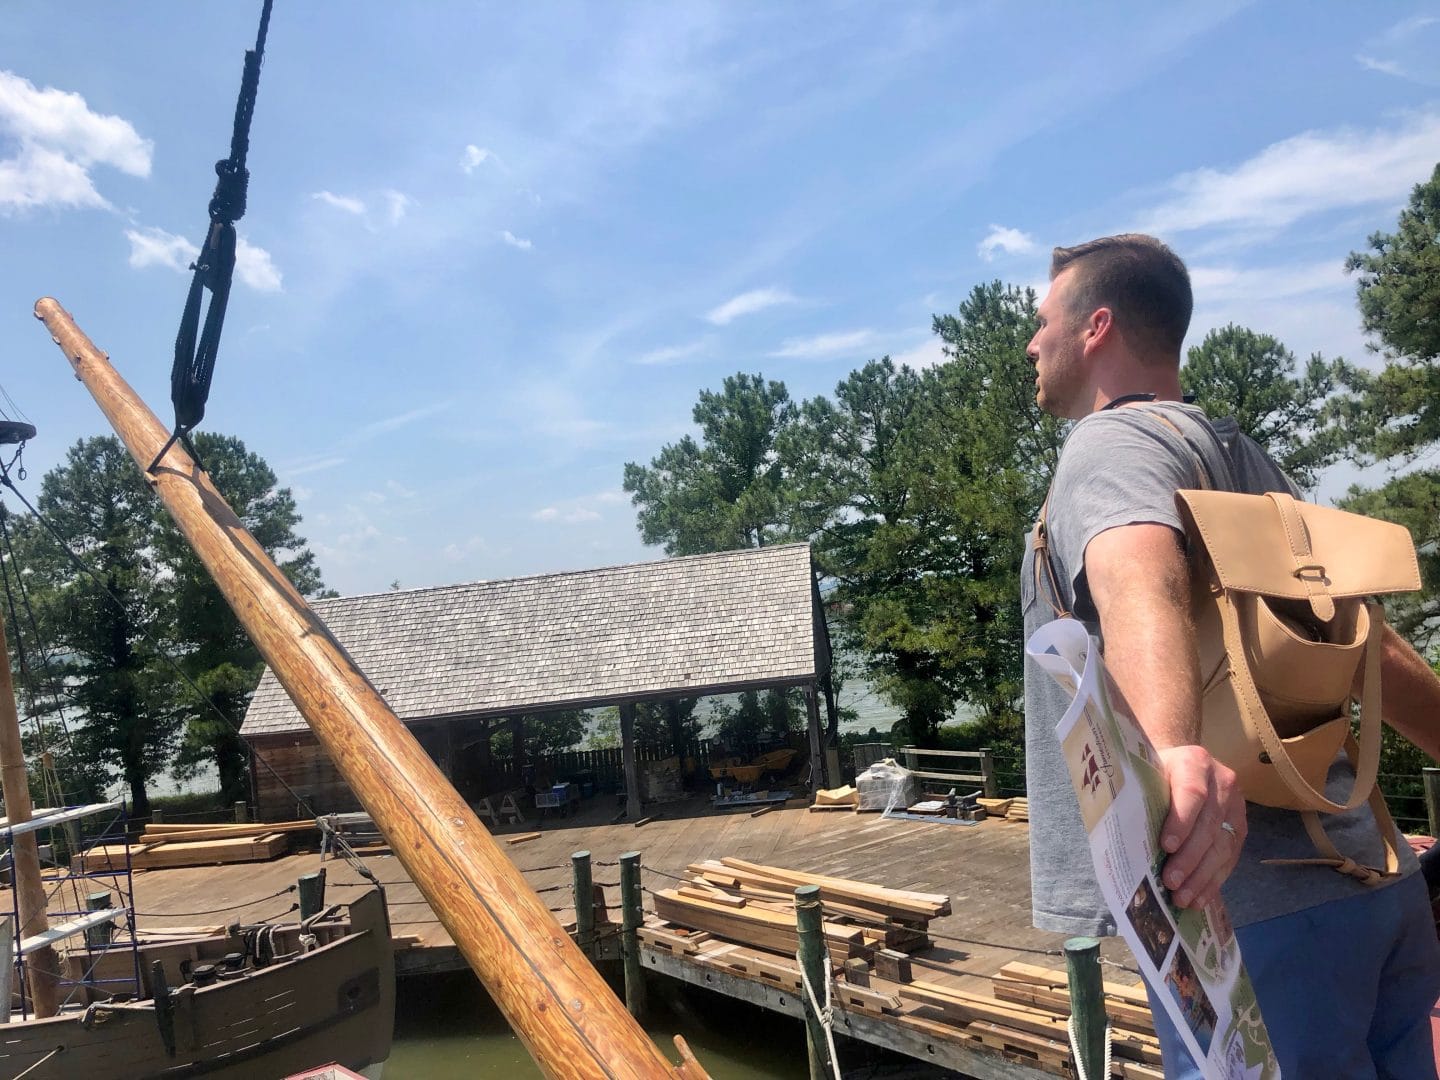 Jamestown Settlement in Virginia boats settlers arrived in